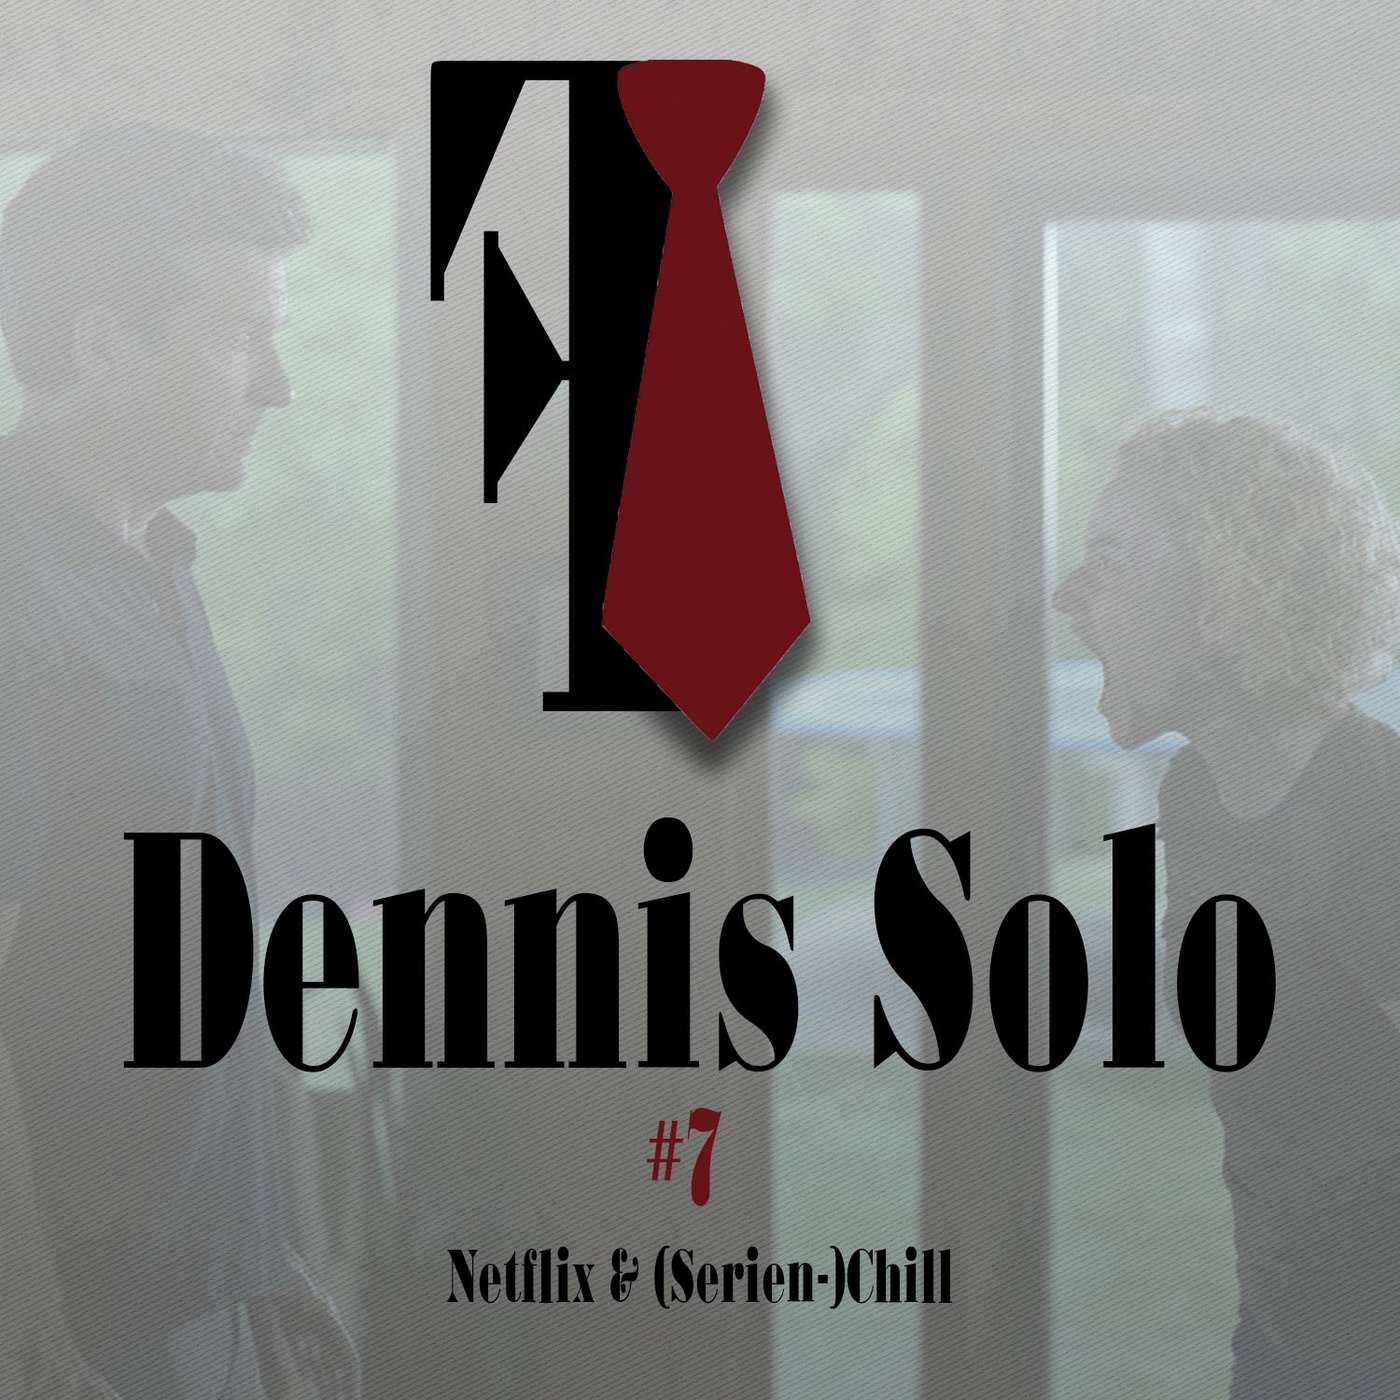 Dennis Solo #7: Netflix & (Serien-)Chill